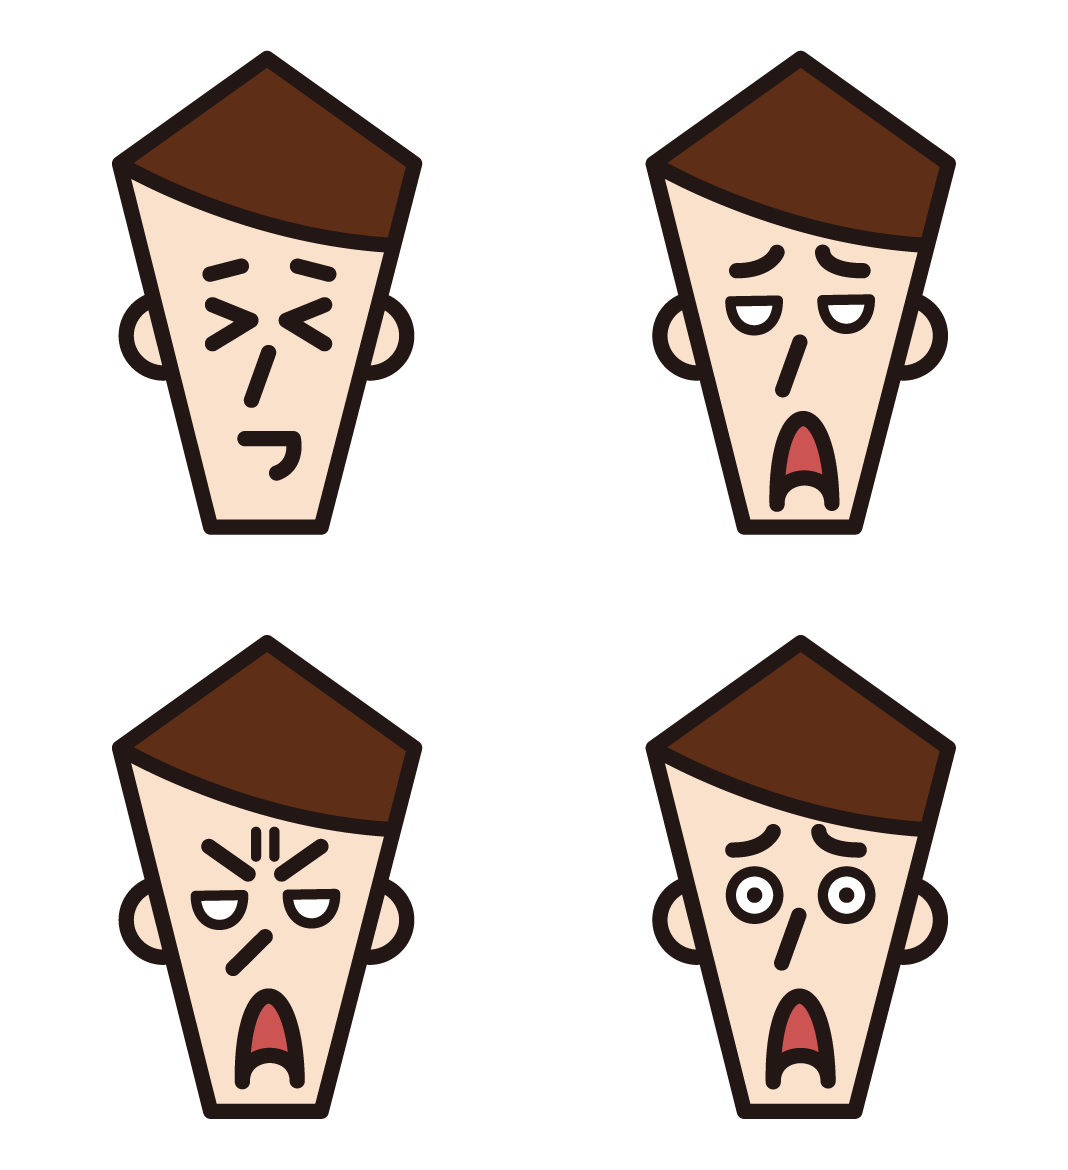 3 illustrations of various facial expressions of men